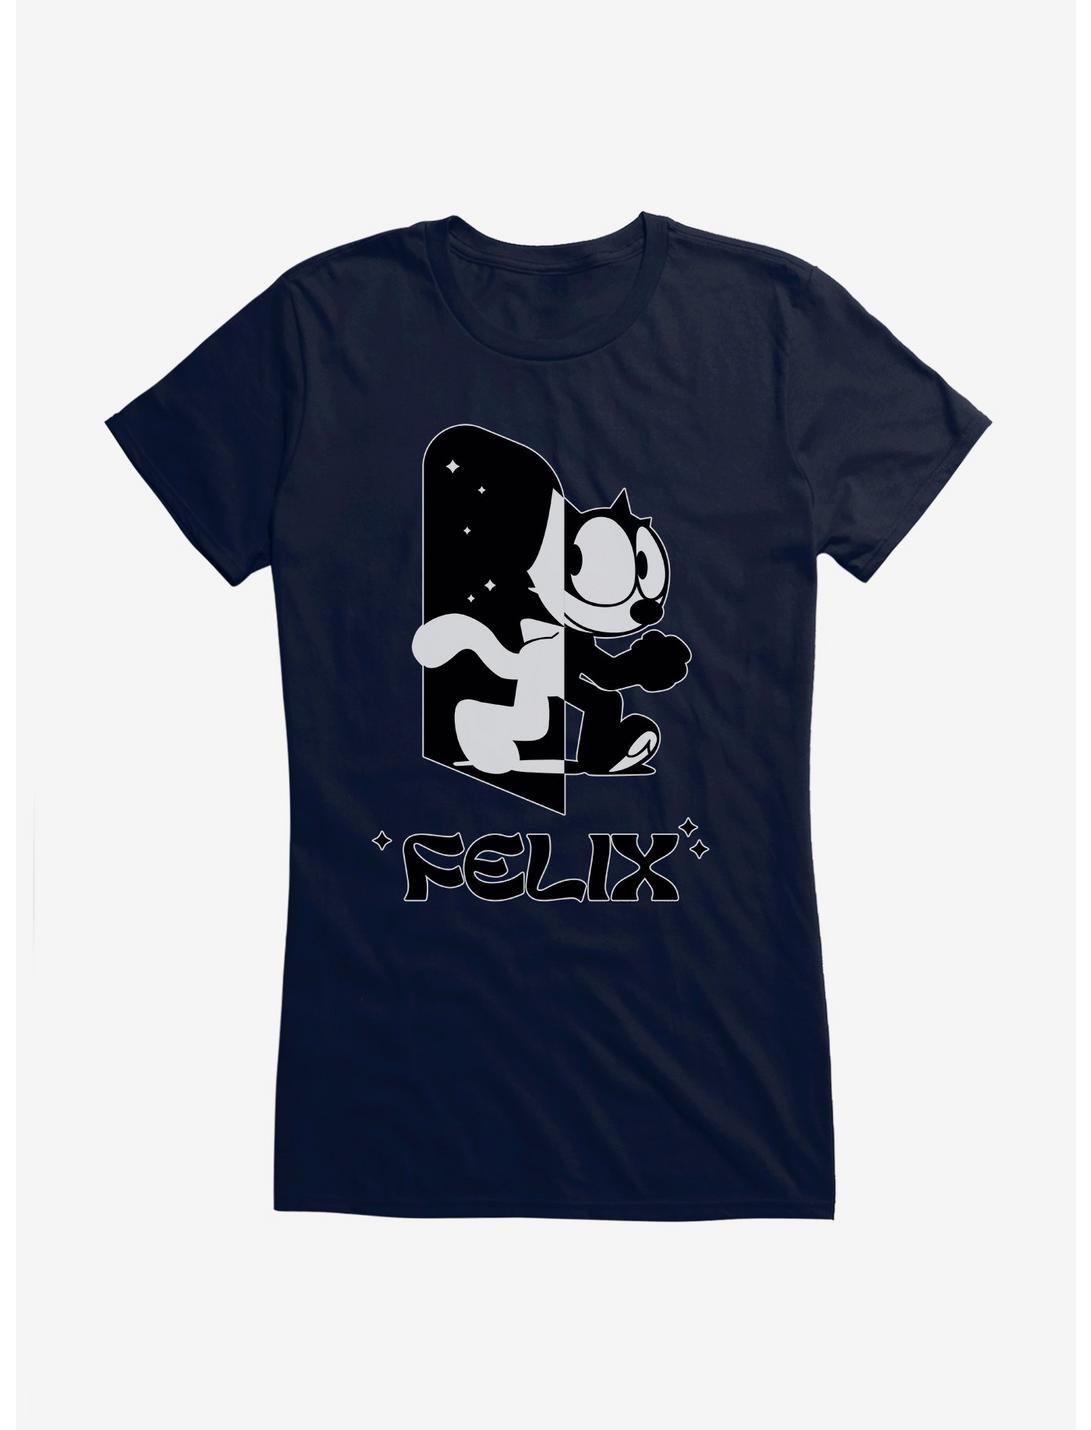 Felix The Cat Black and White Girls T-Shirt, NAVY, hi-res